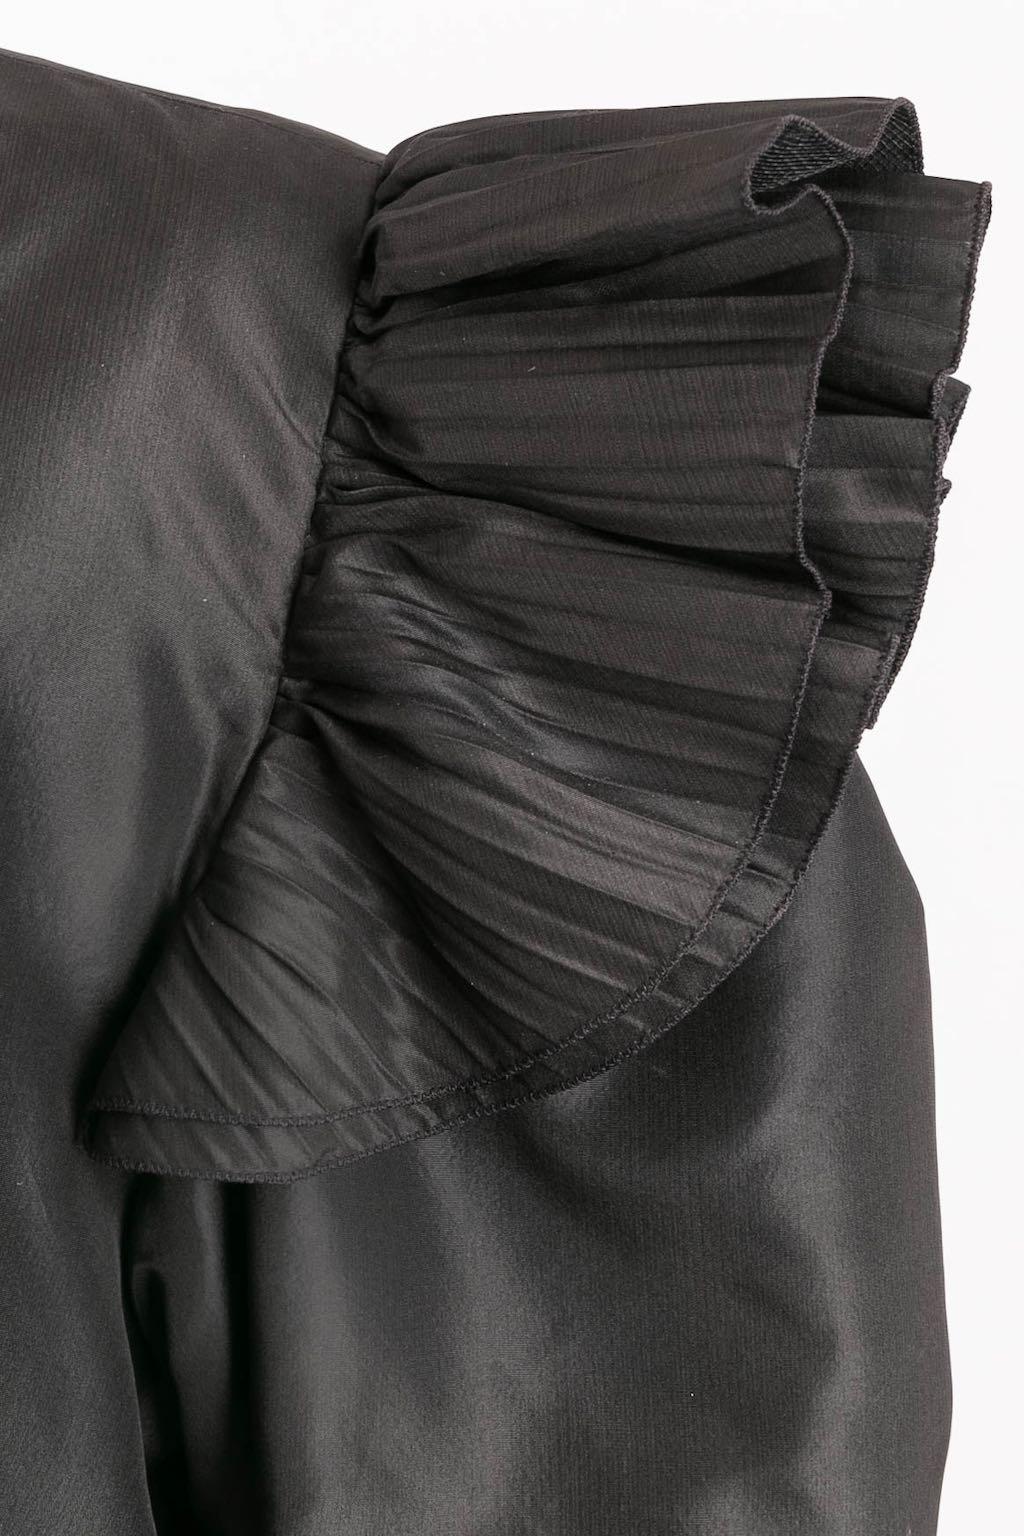 Loris Azzaro Asymmetrical Bustier Dress and its Bolero For Sale 7